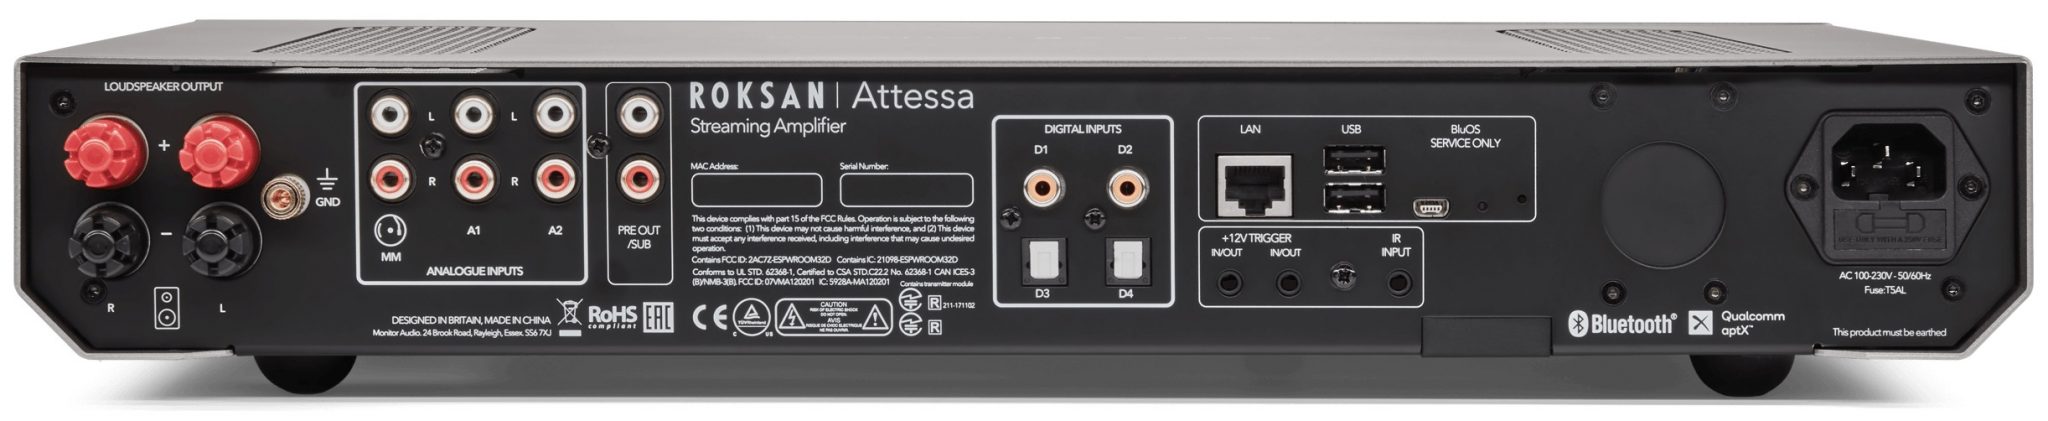 Roksan Attessa Streaming Amp zwart - achterkant - Stereo receiver